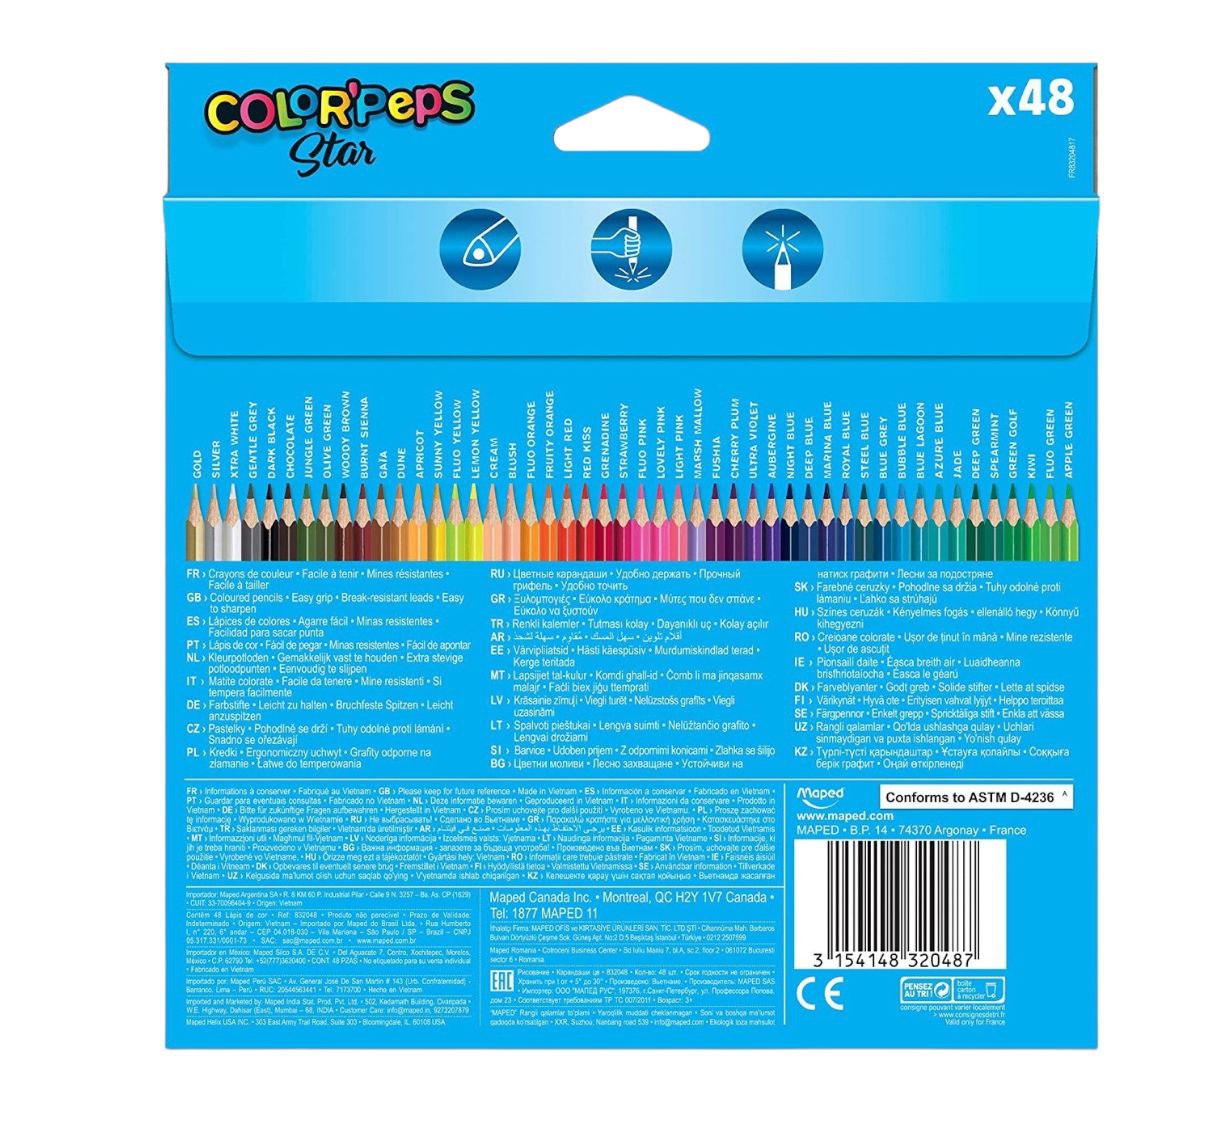 Maped Colored Pencils || الوان خشبية مابد